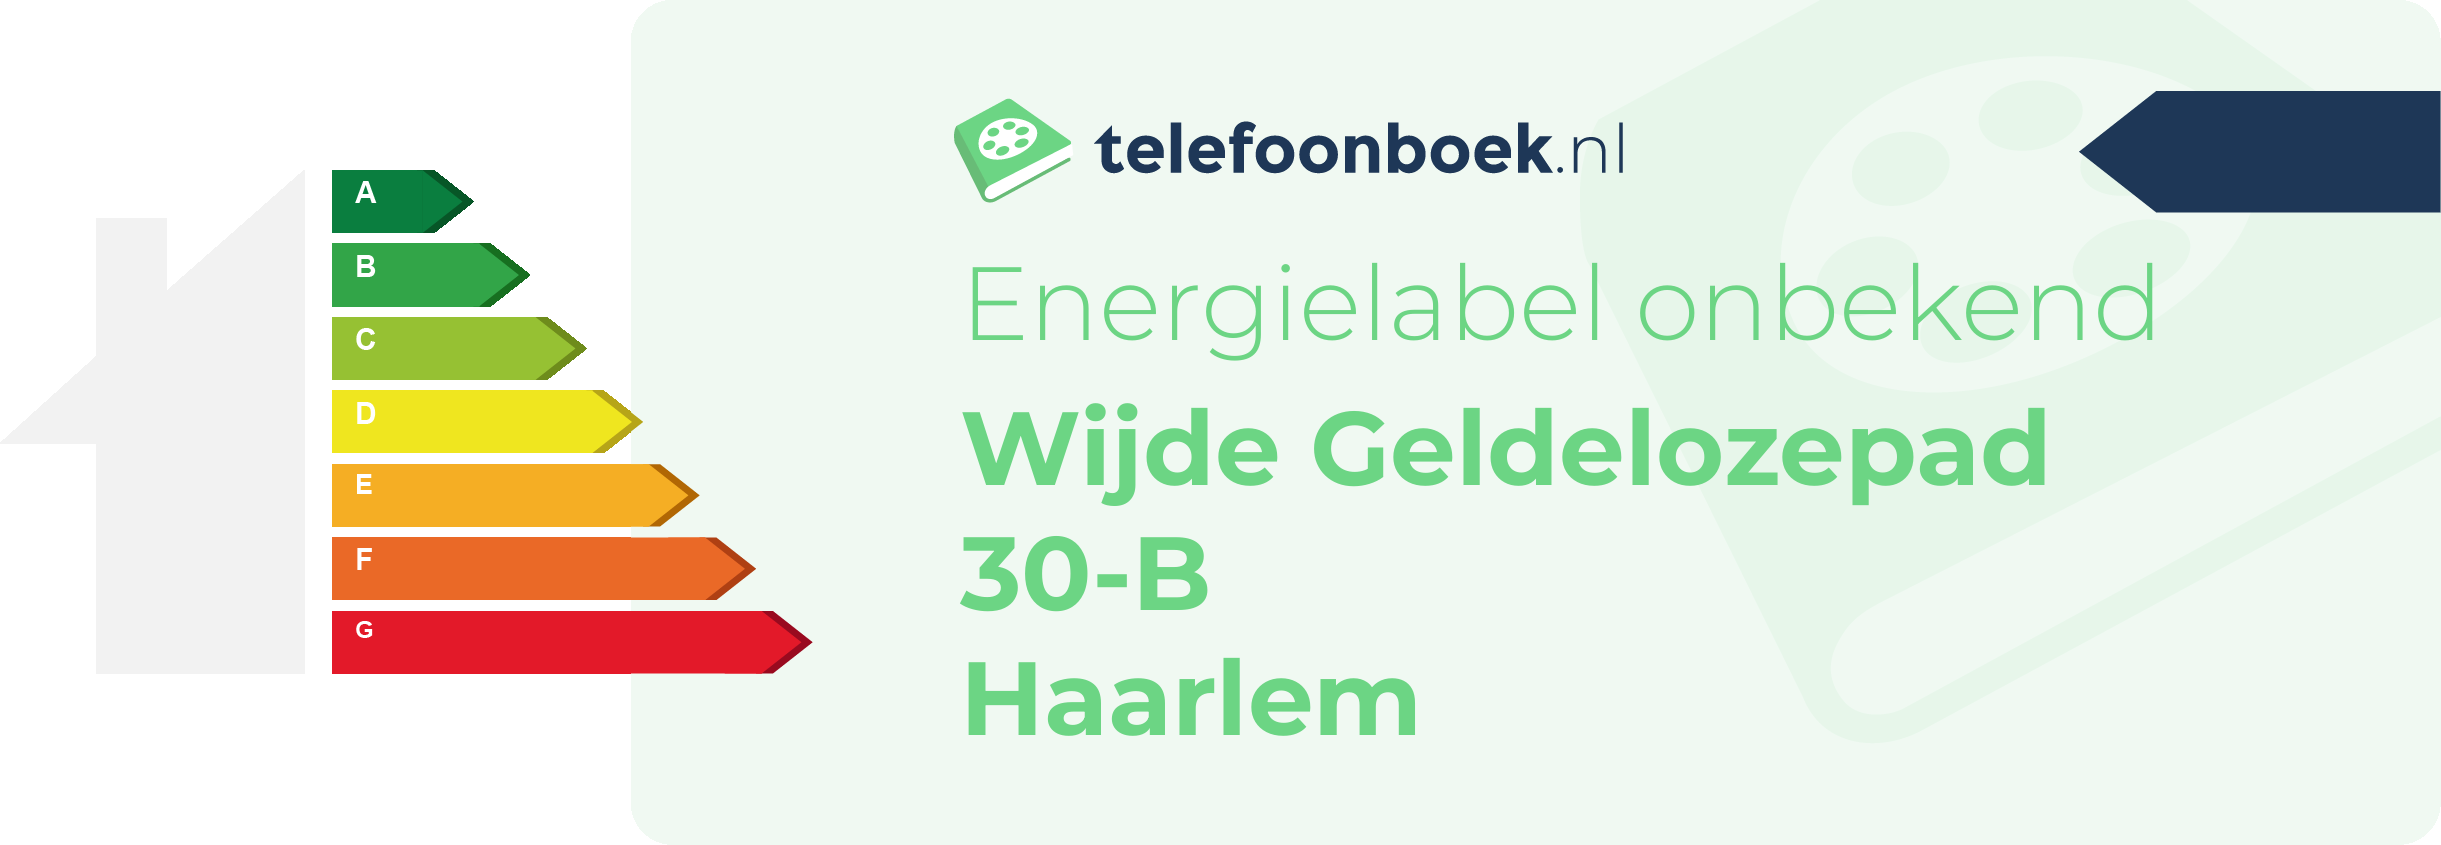 Energielabel Wijde Geldelozepad 30-B Haarlem